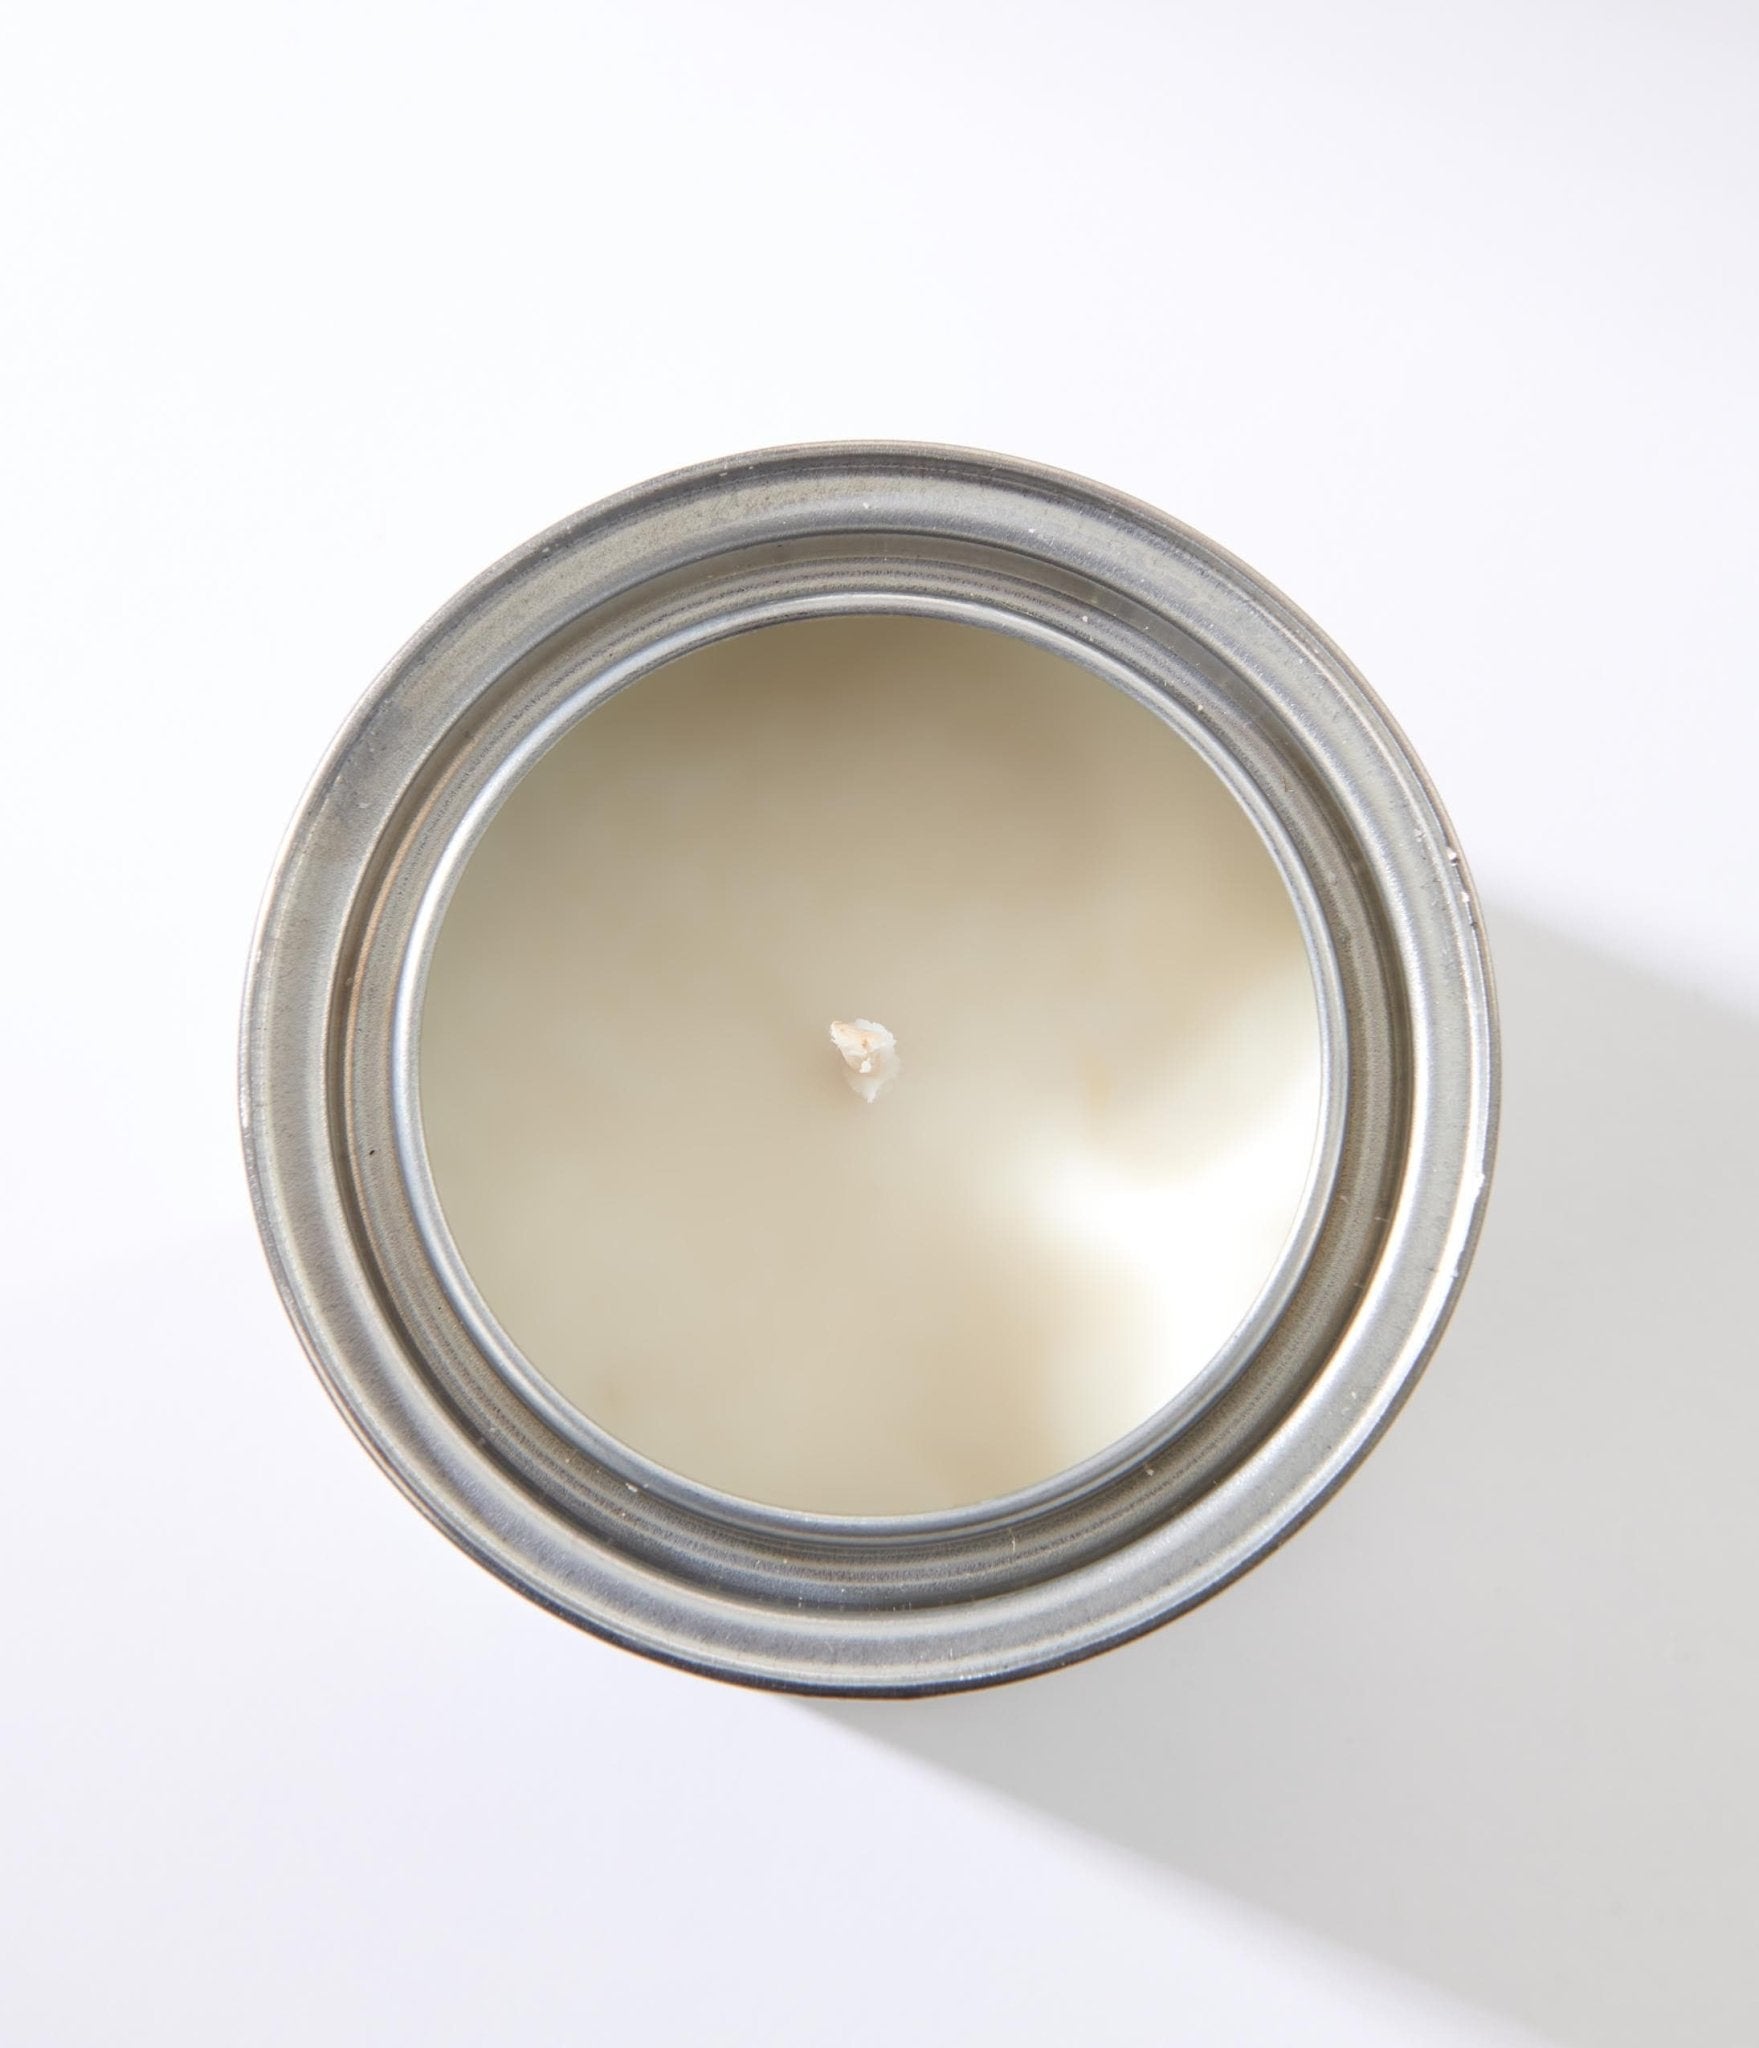 Candle Paint Can (Hand Poured 8 oz.) – C & A's Choices Boutique